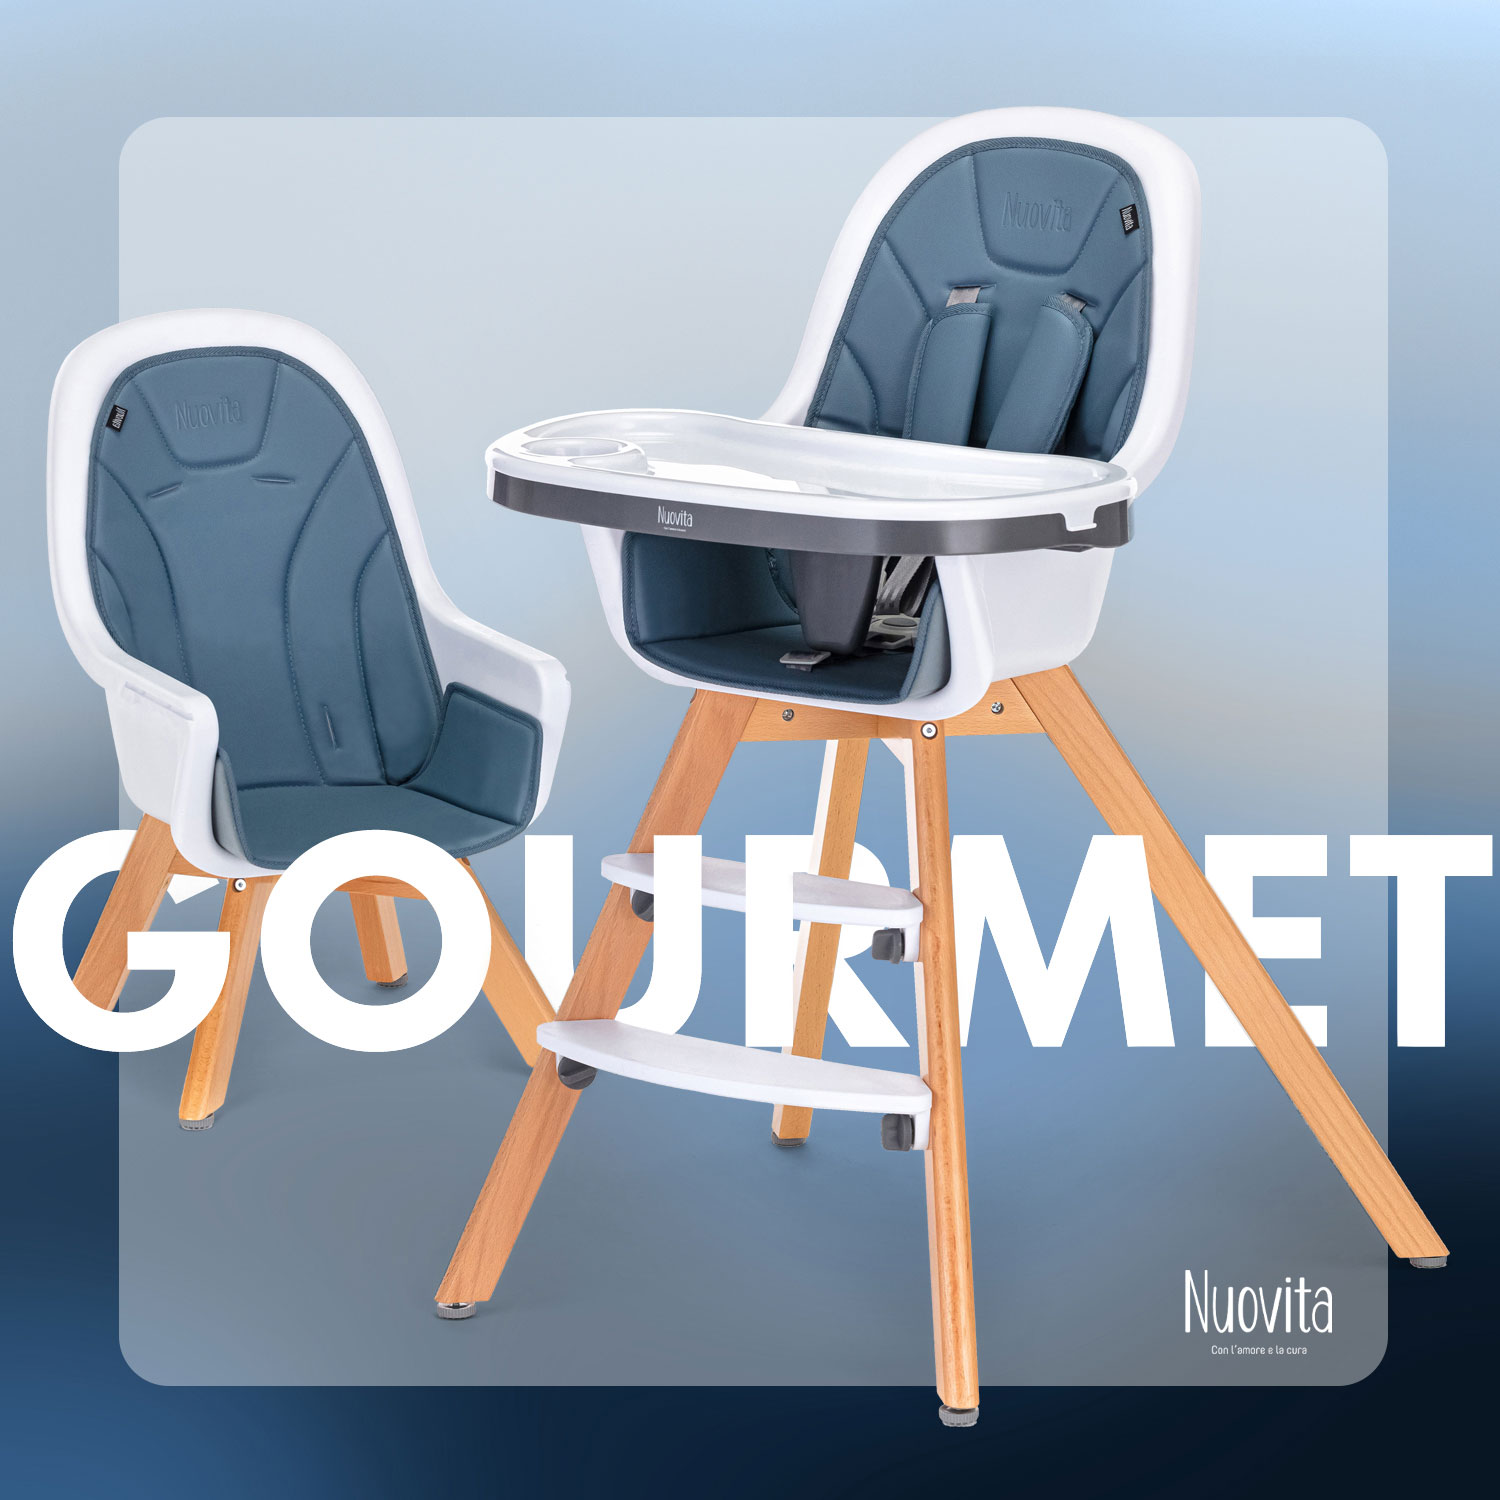 Стульчик для кормления Nuovita Gourmet (Blu, Legno/Синий, Деревянный), до 5 лет стульчик для кормления nuovita gourmet g1 lux 3 в 1